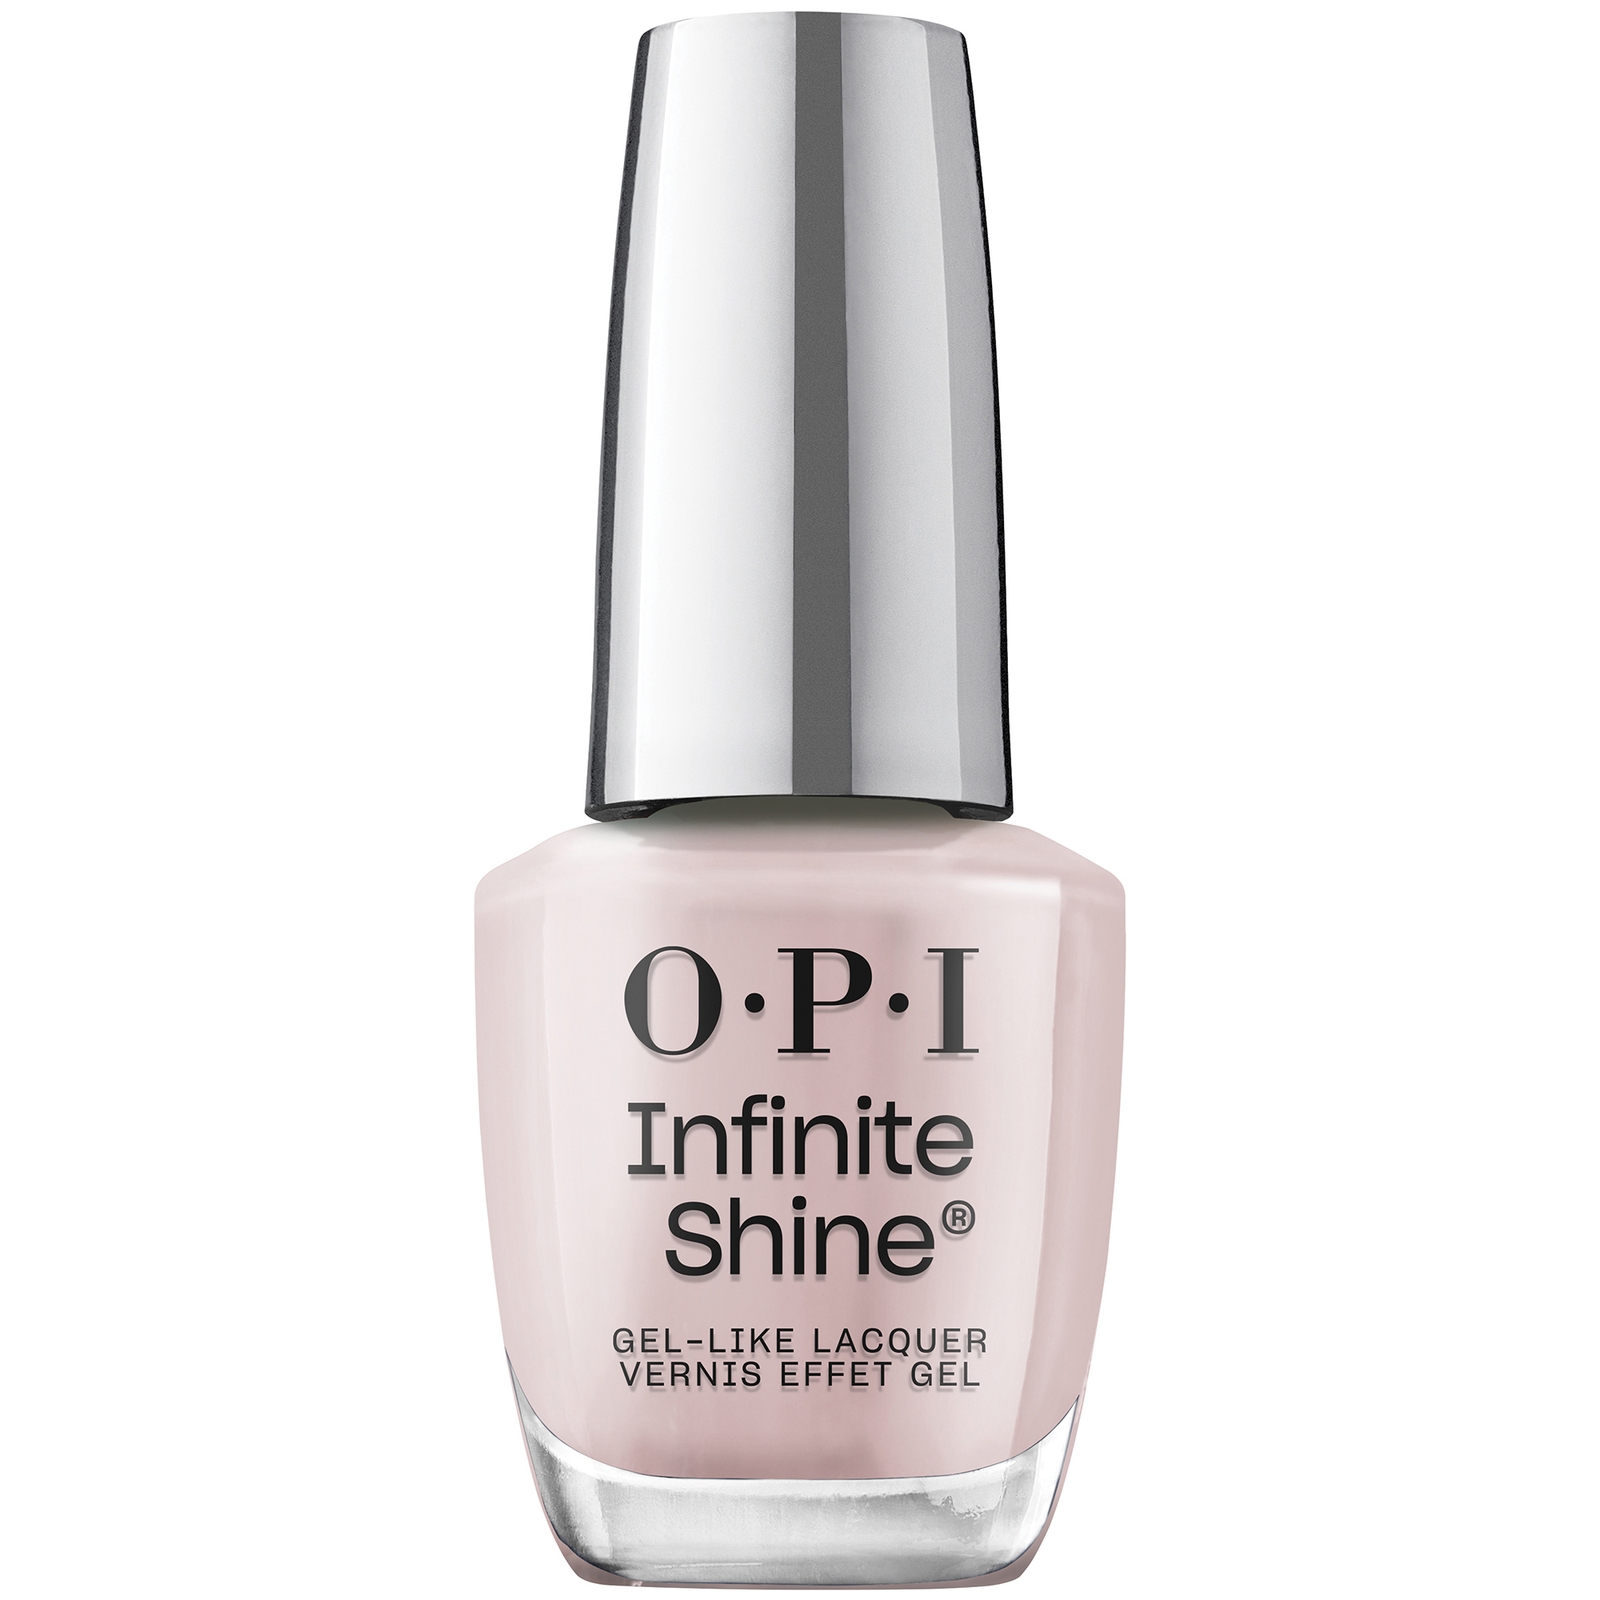 Opi Infinite Shine Long-wear Nail Polish - Don't Bossa Nova Me Around 15ml In White